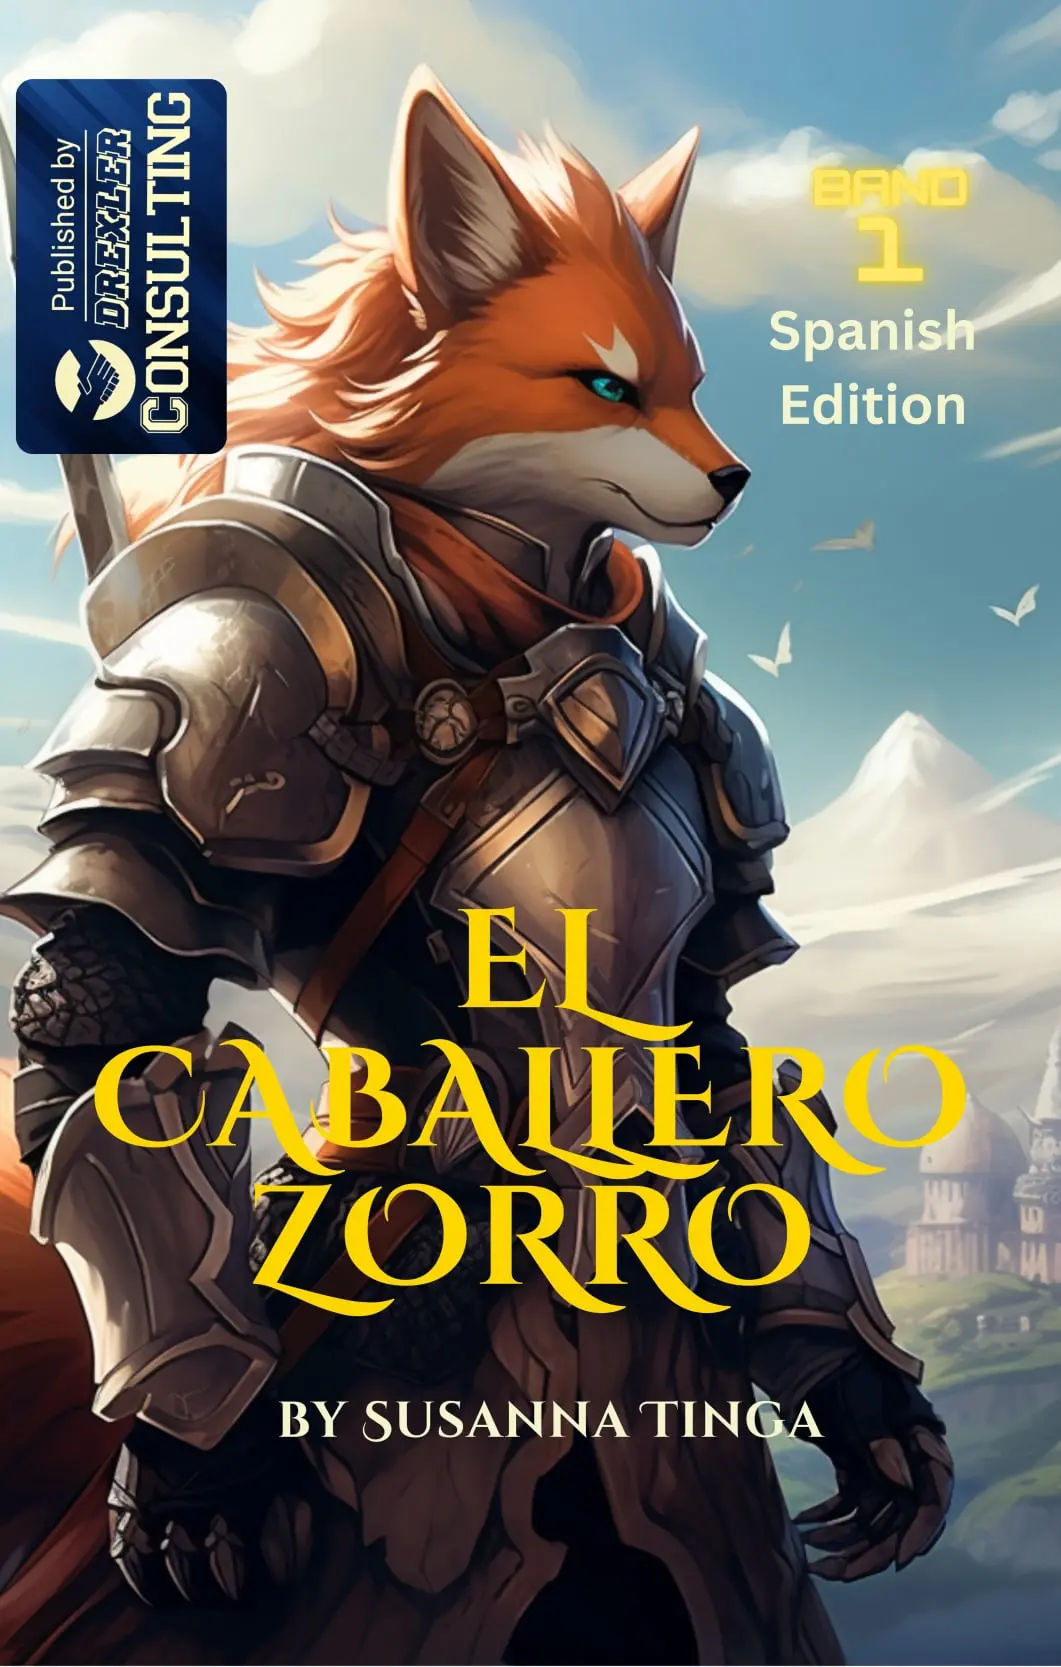 el caballero Zorro by susanna tinga, spanish edition of the fox knight 1 drexler consulting, a fox in rüstung